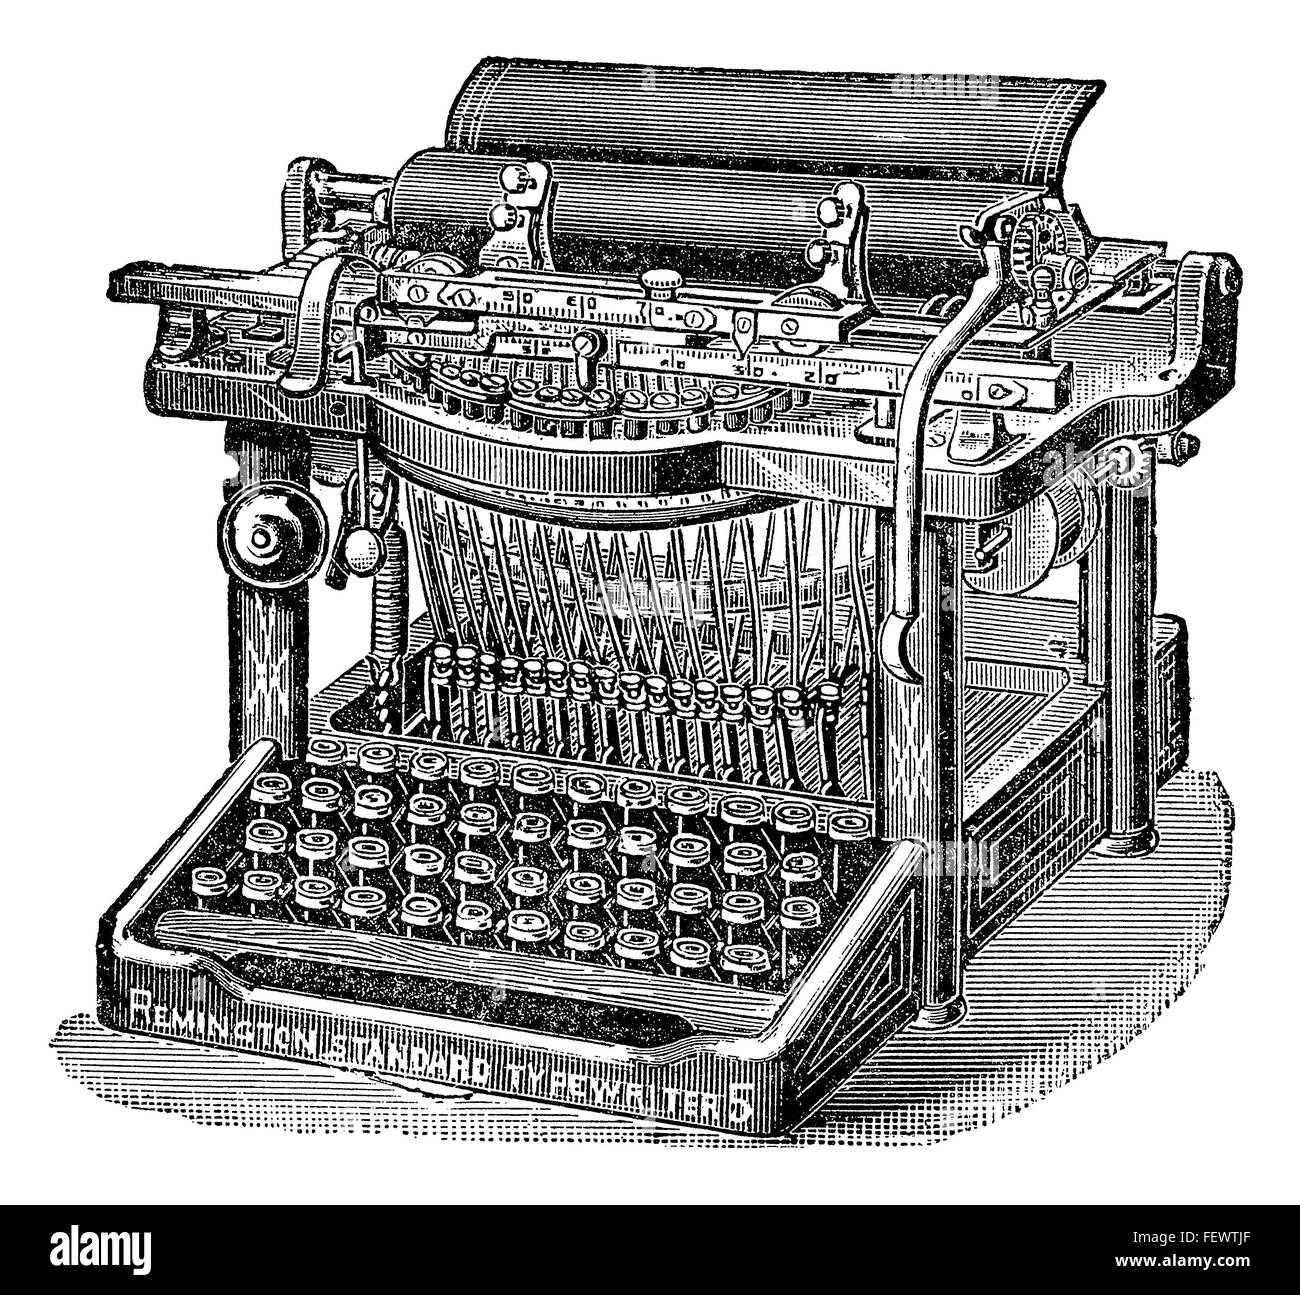 Black and white illustration of a 19th century Remington typewriter. Stock Photo